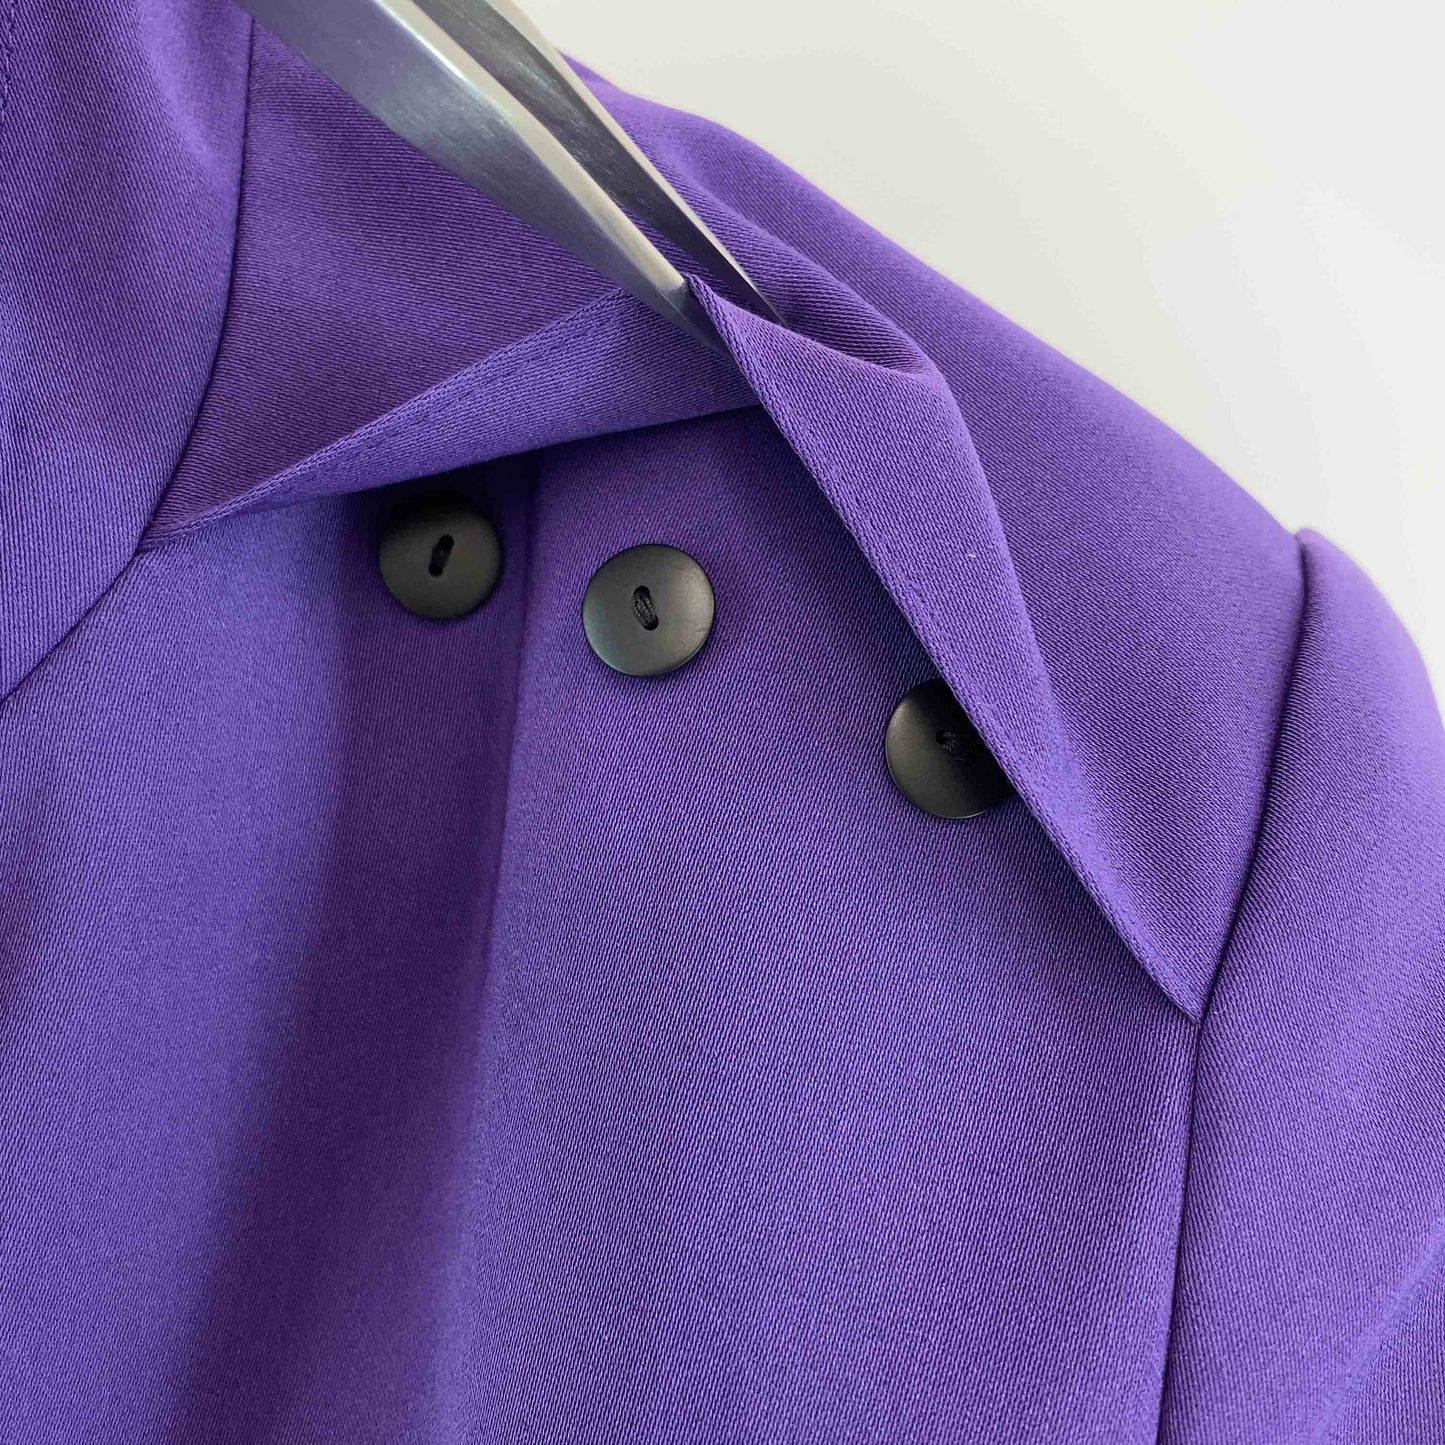 Auk mode スーツセットアップ  レディース テーラードジャケット スカートスーツ セットアップ 紫 パープル